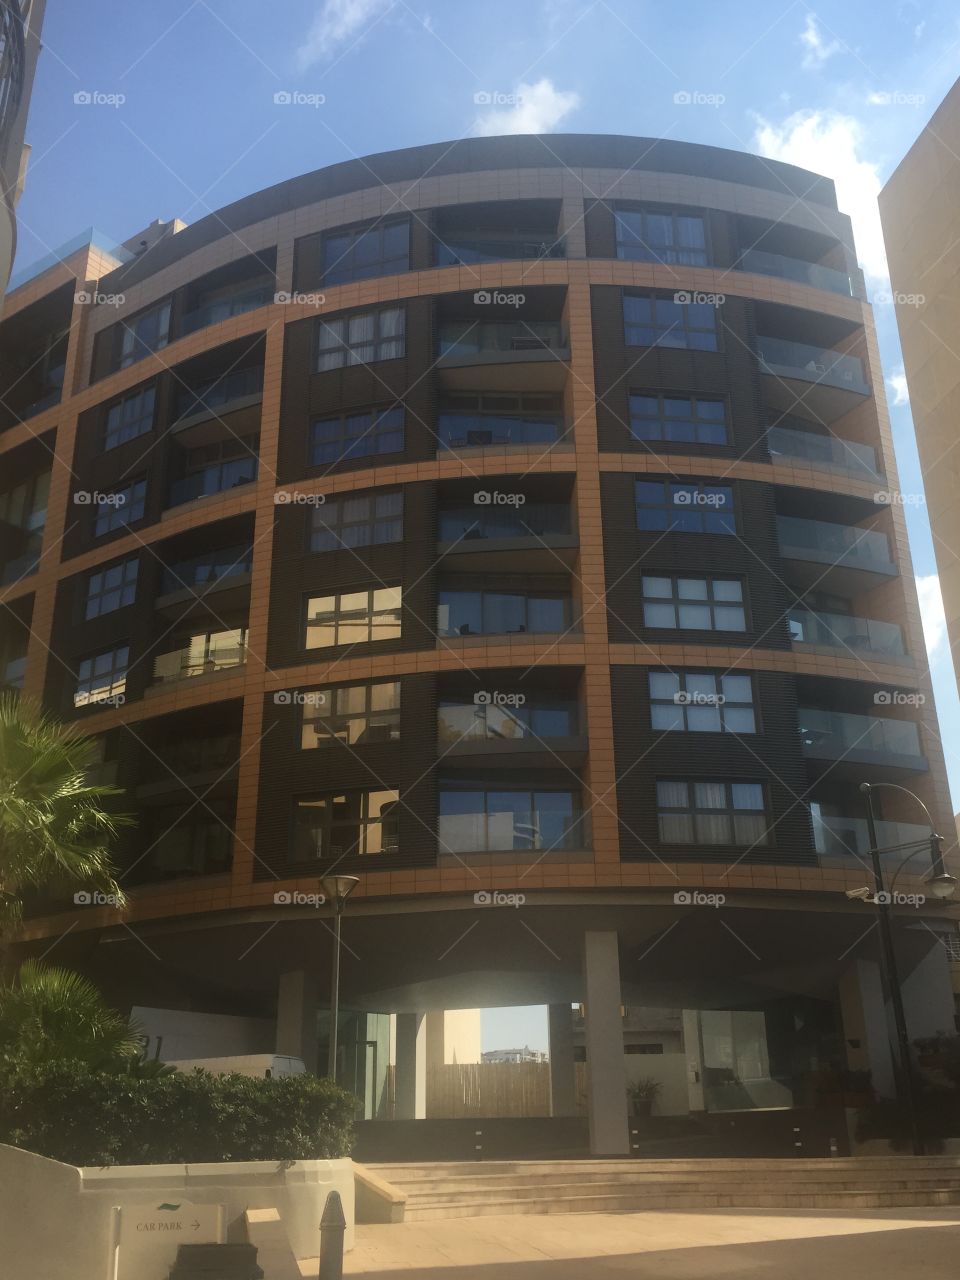 Windows around the world. Many large windows in a contemporary apartment block in Portomaso, San Giljan, Portomaso.